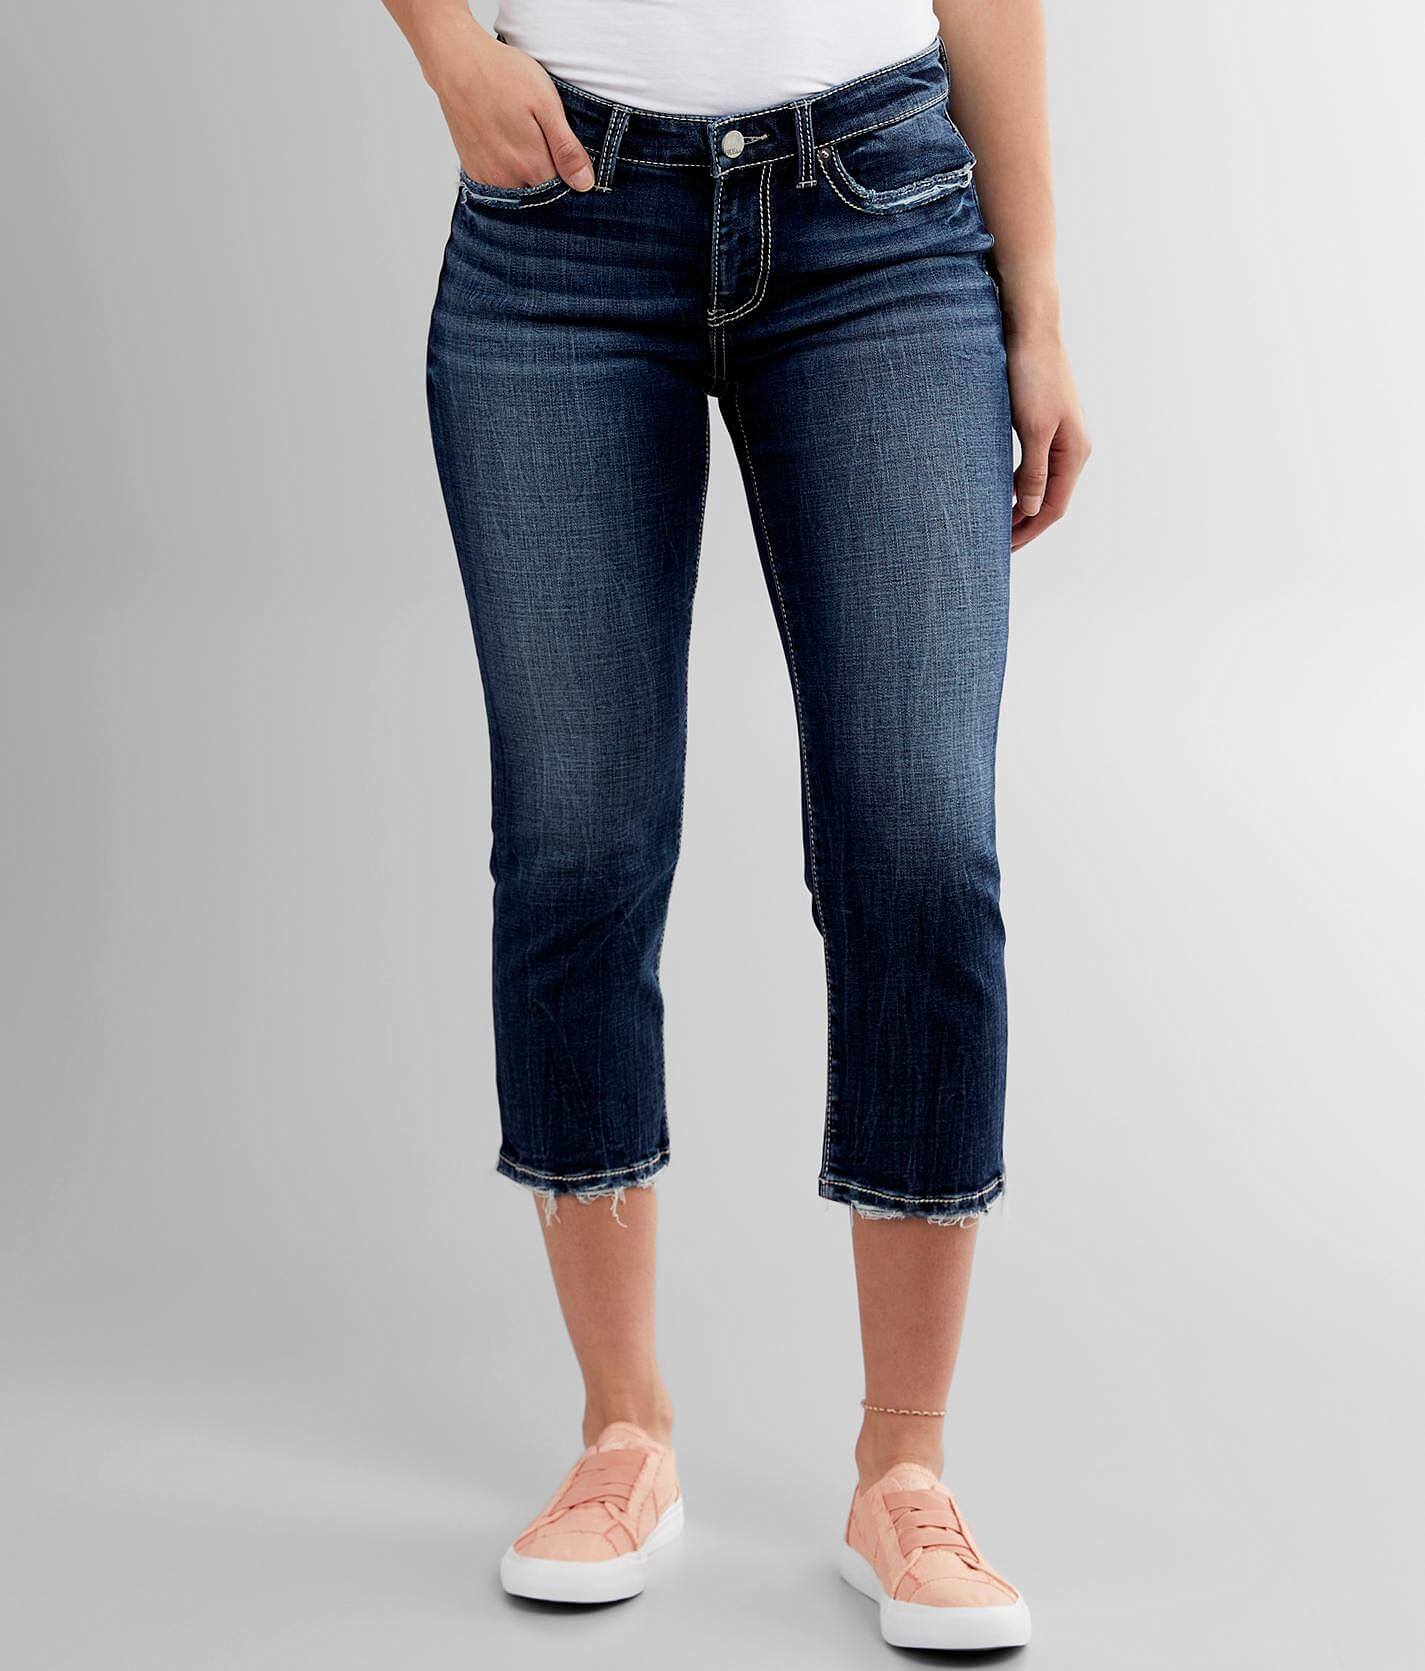 buckle capri jeans